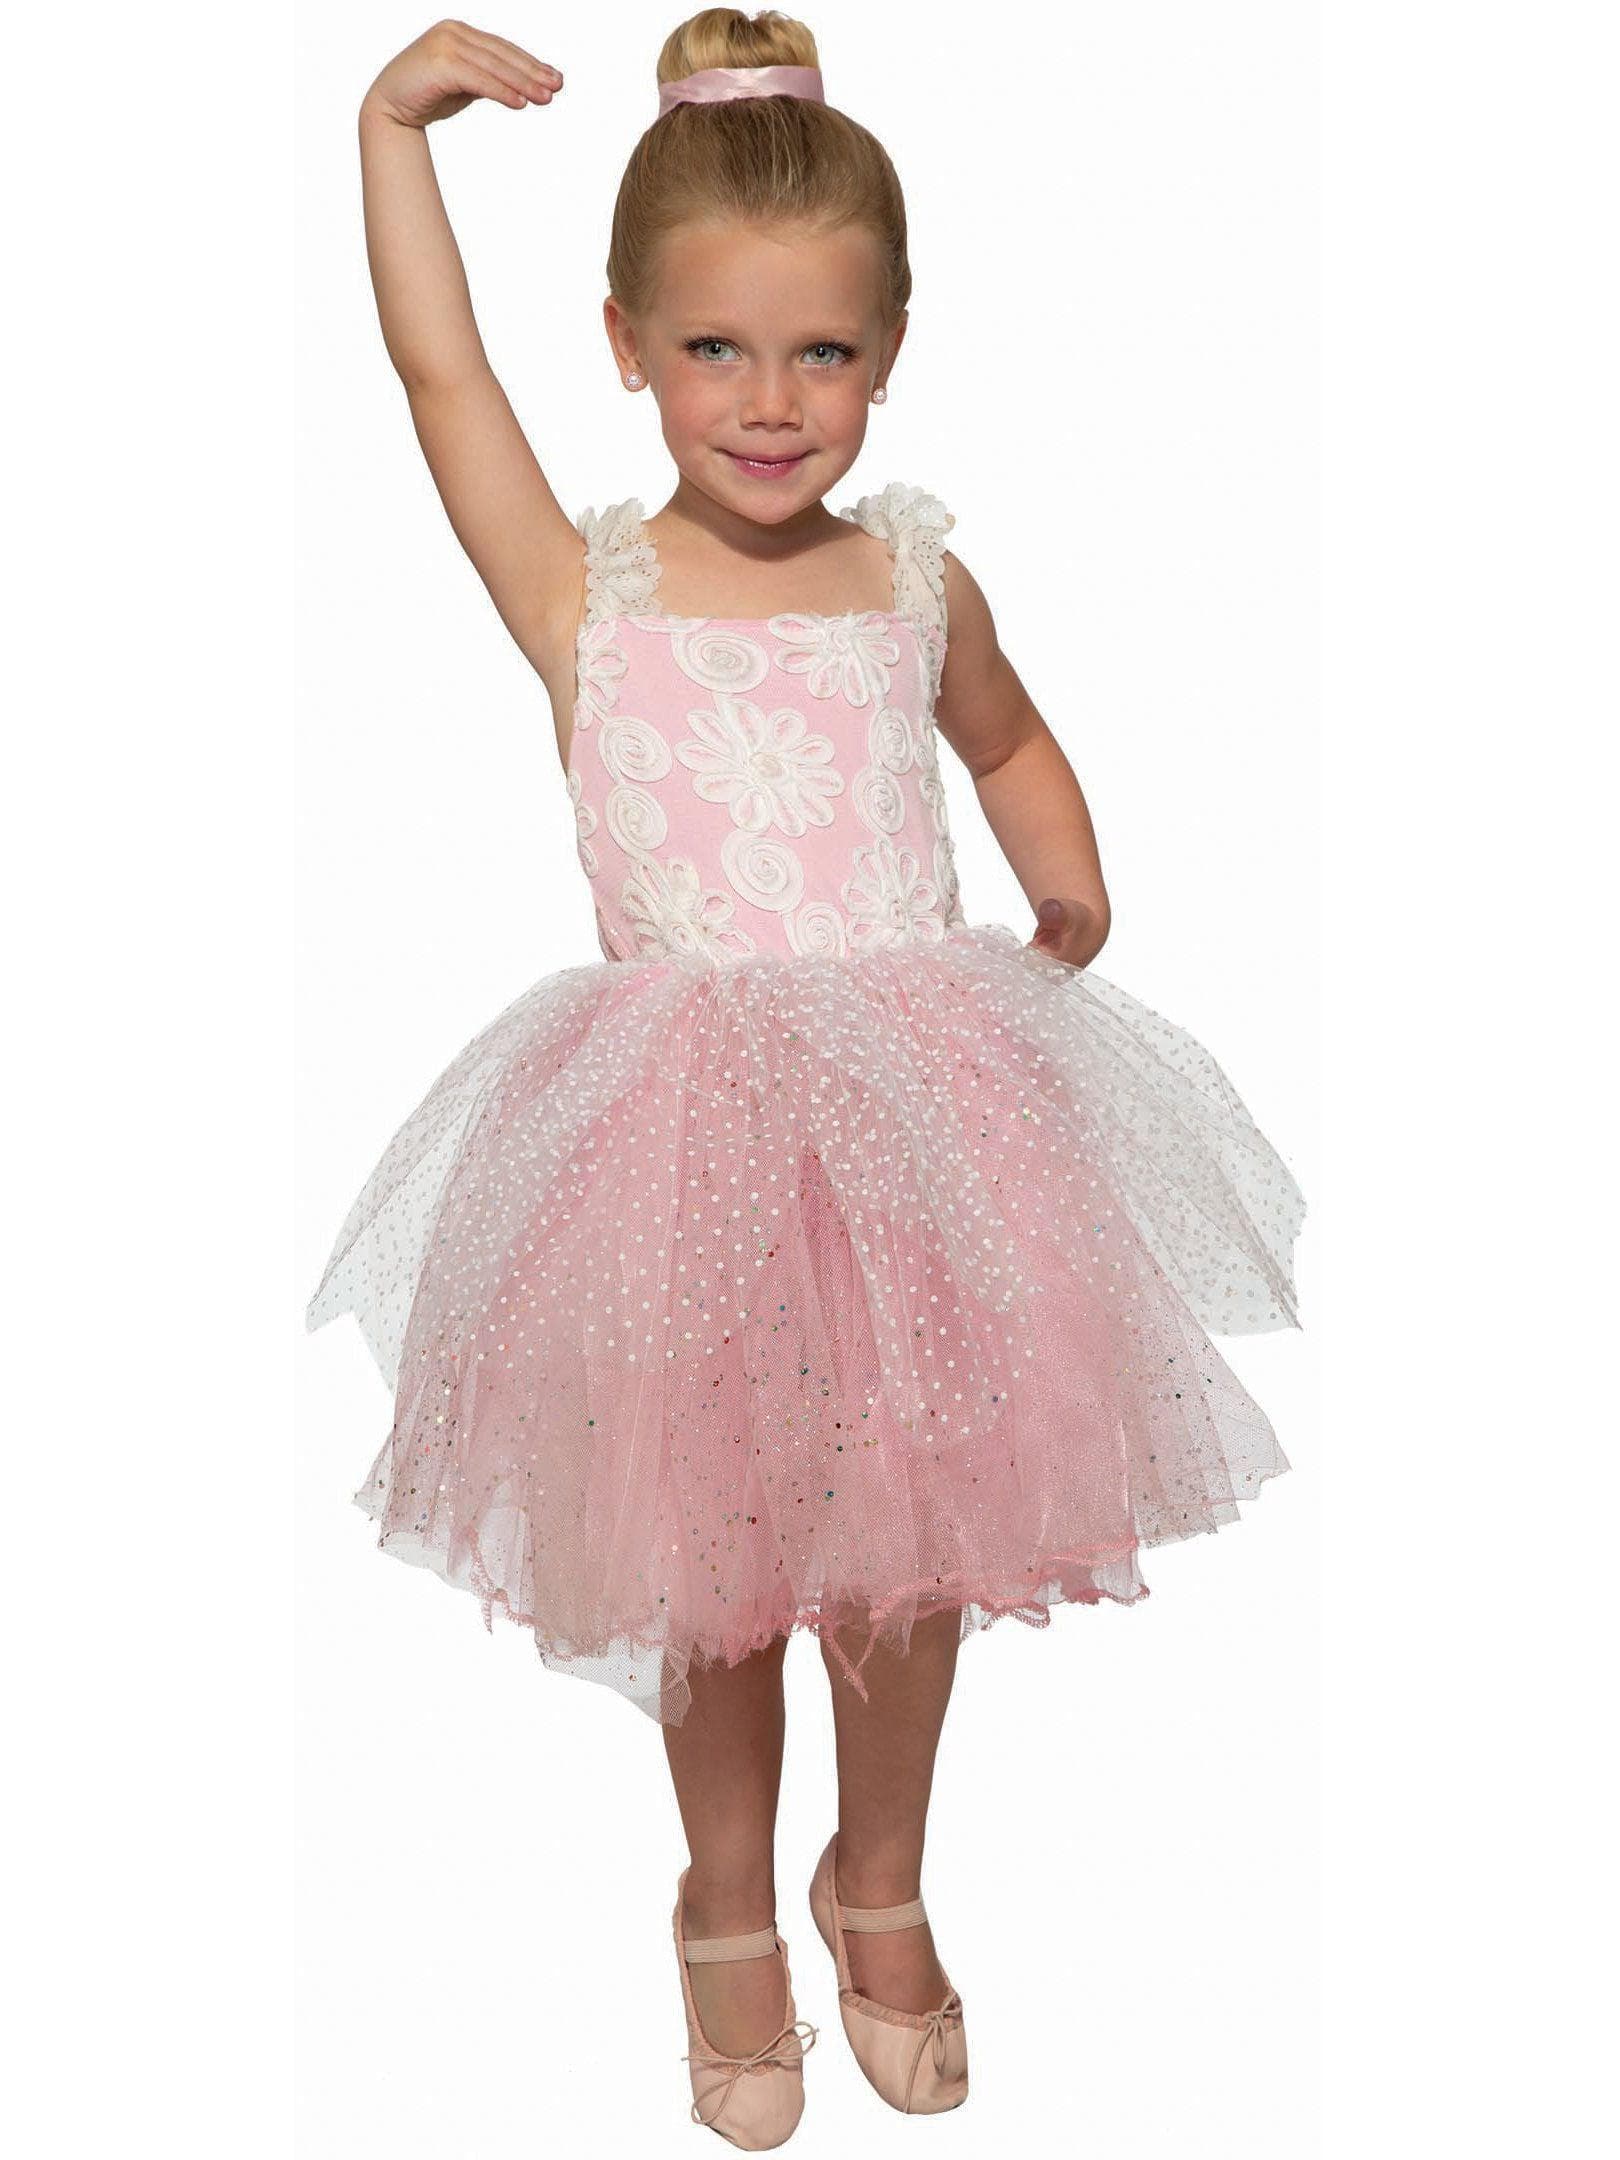 Kid's Ballerina Costume - costumes.com